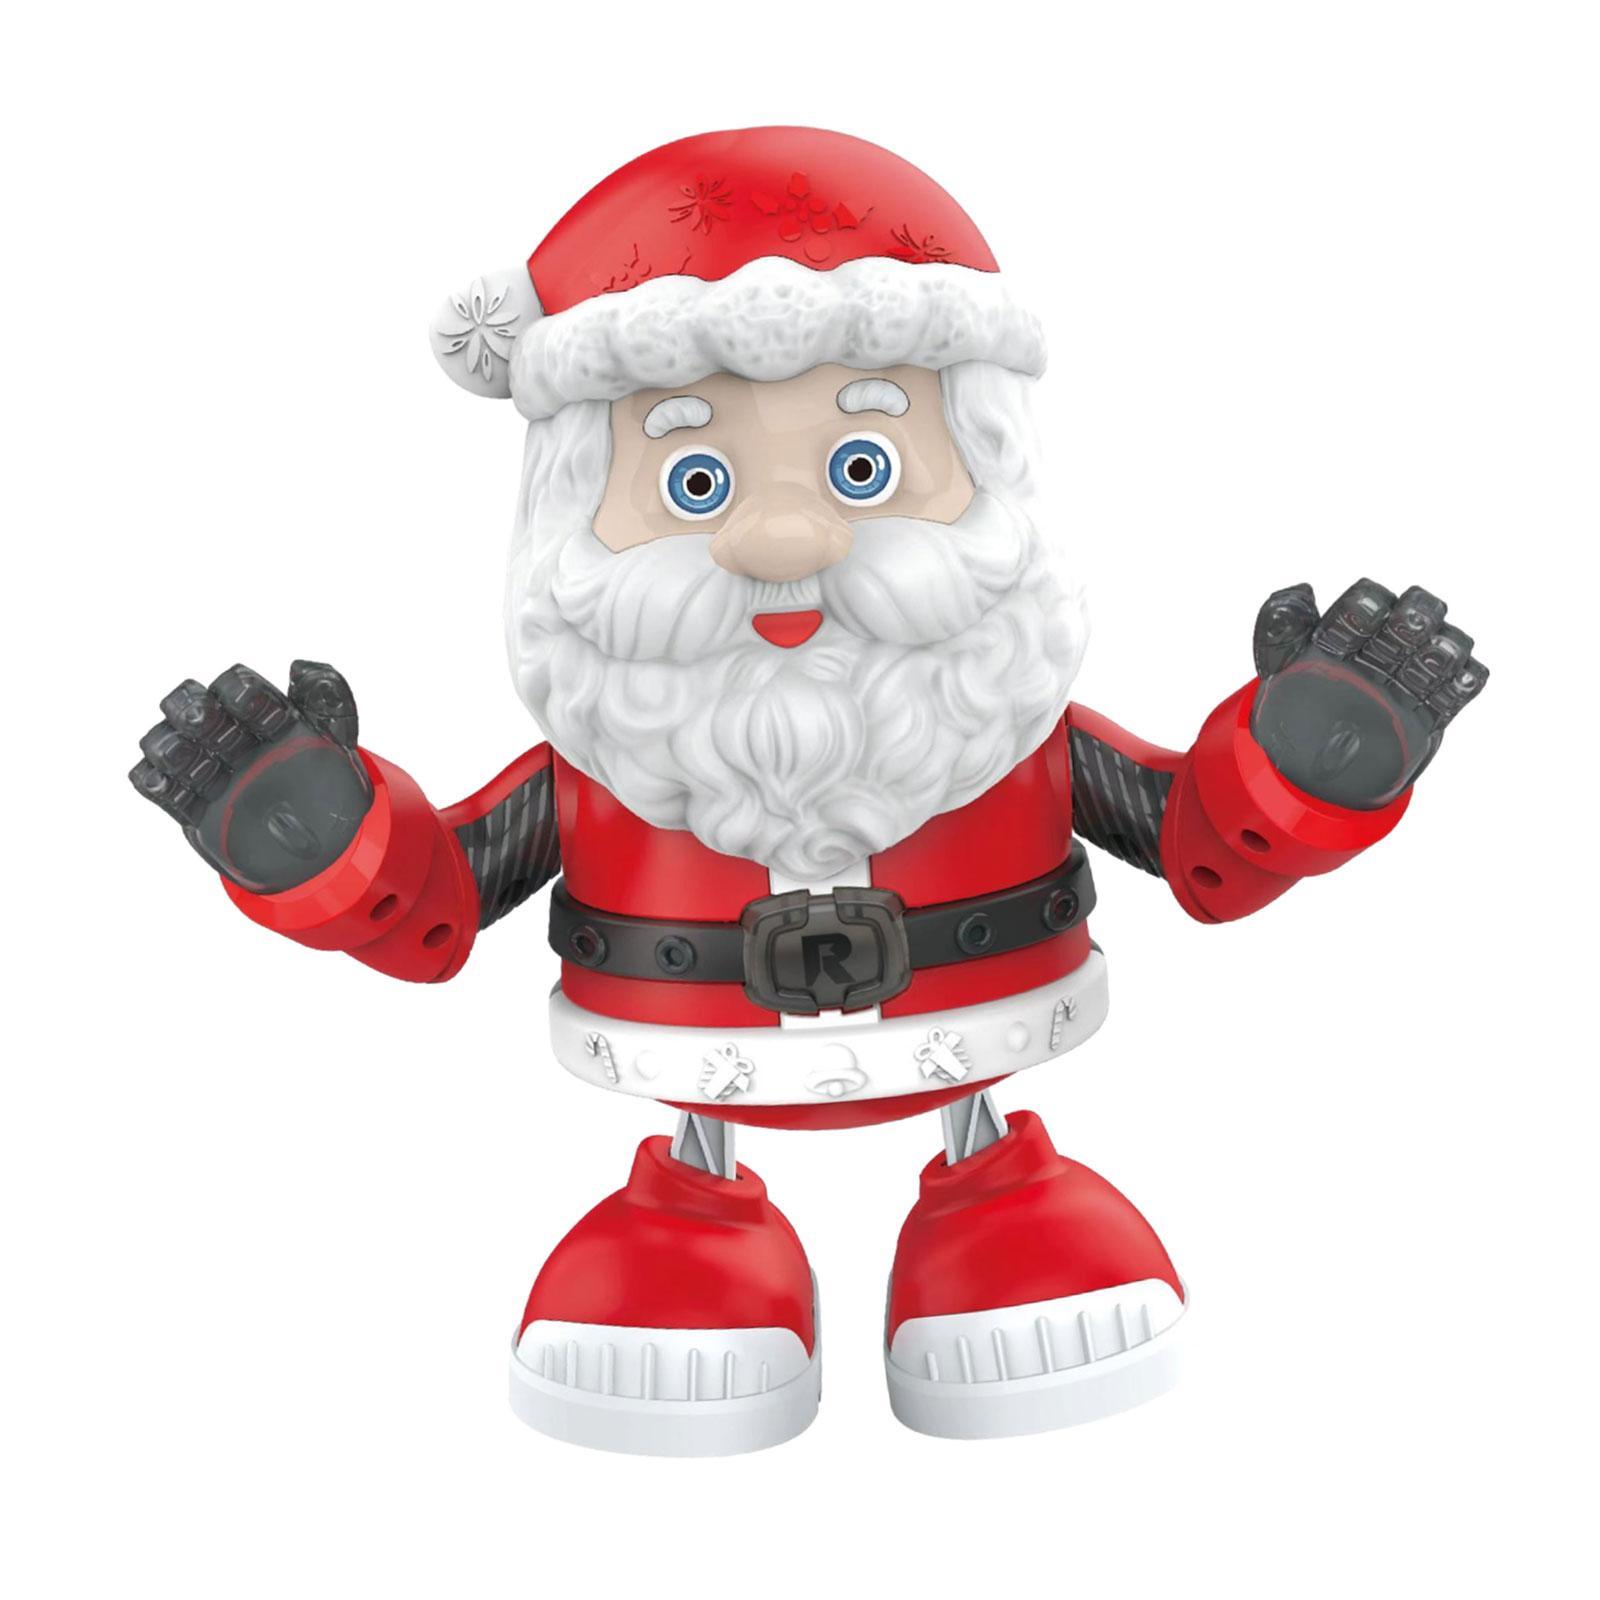 Singing Dancing Santa Claus Electric Santa Claus Toy for Xmas Party Tabletop